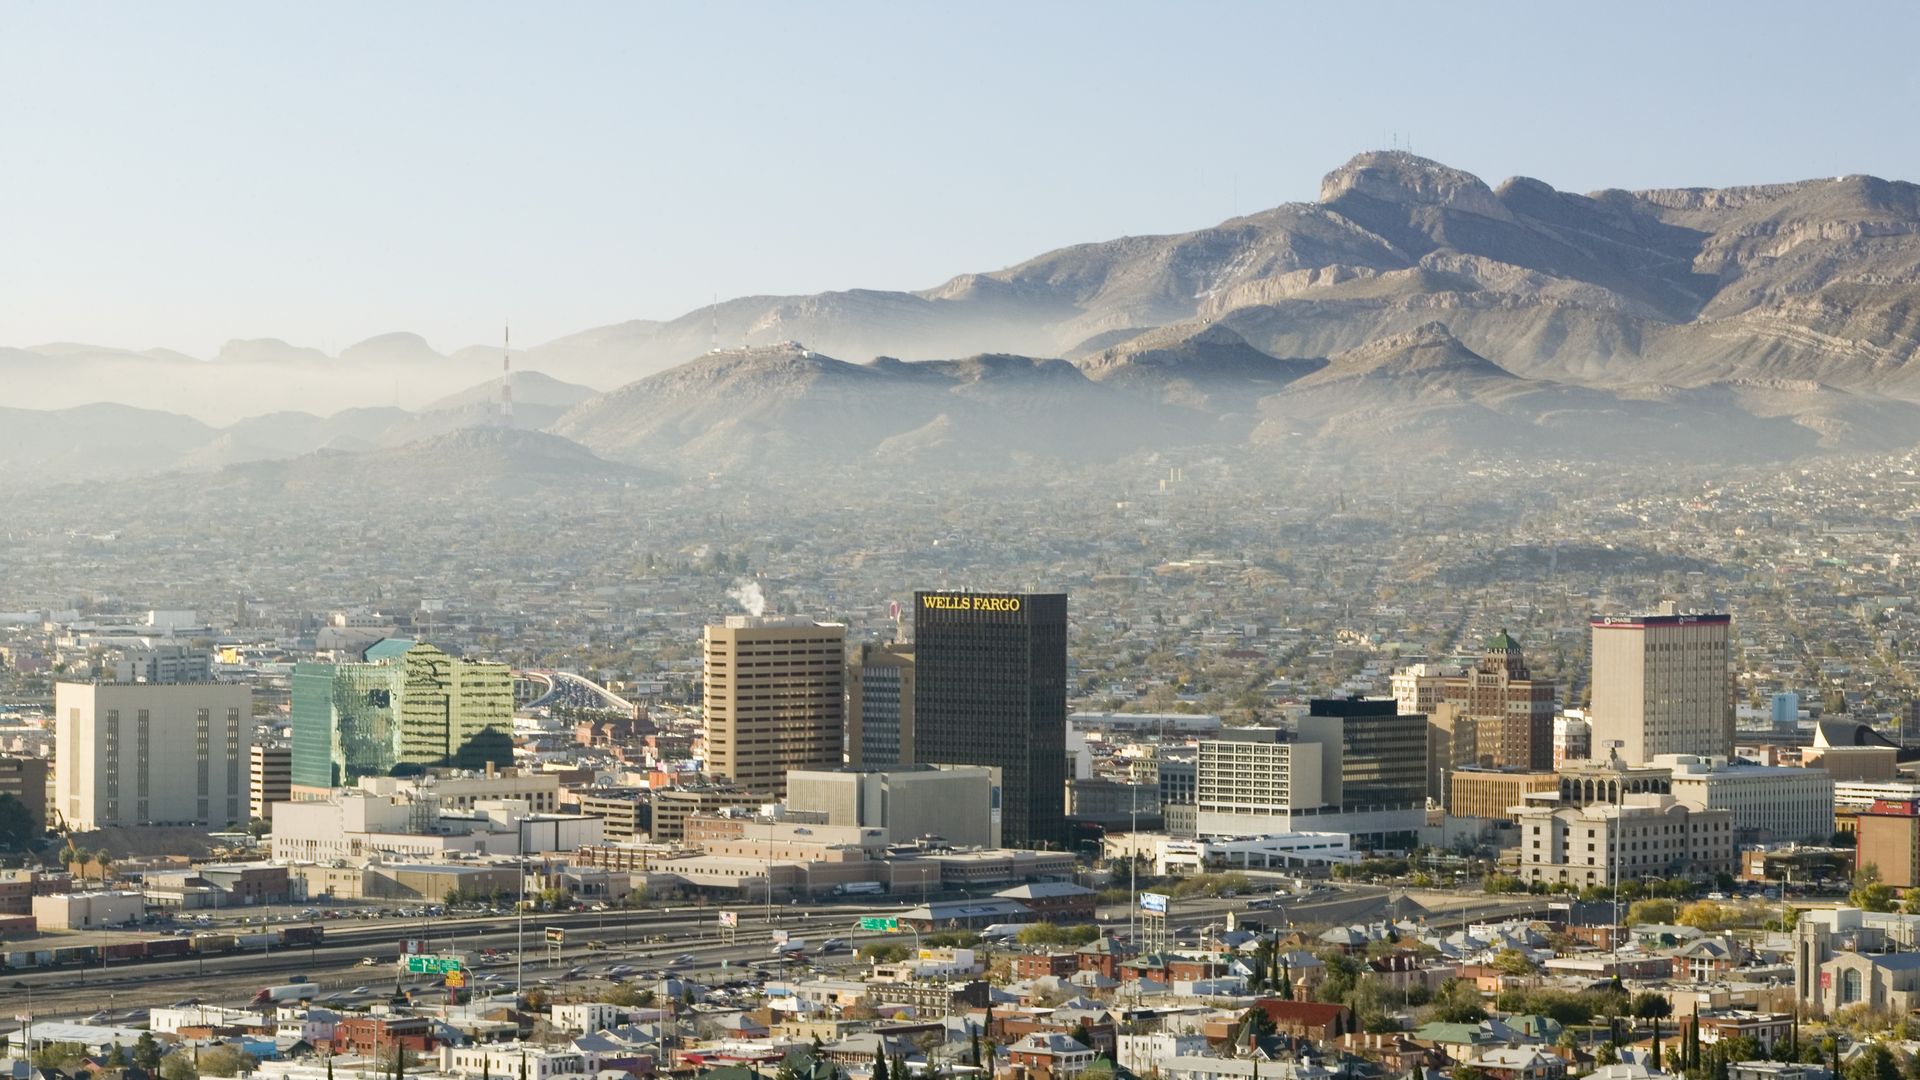 Panoramic view of skyline and downtown El Paso Texas looking toward Juarez, Mexico 